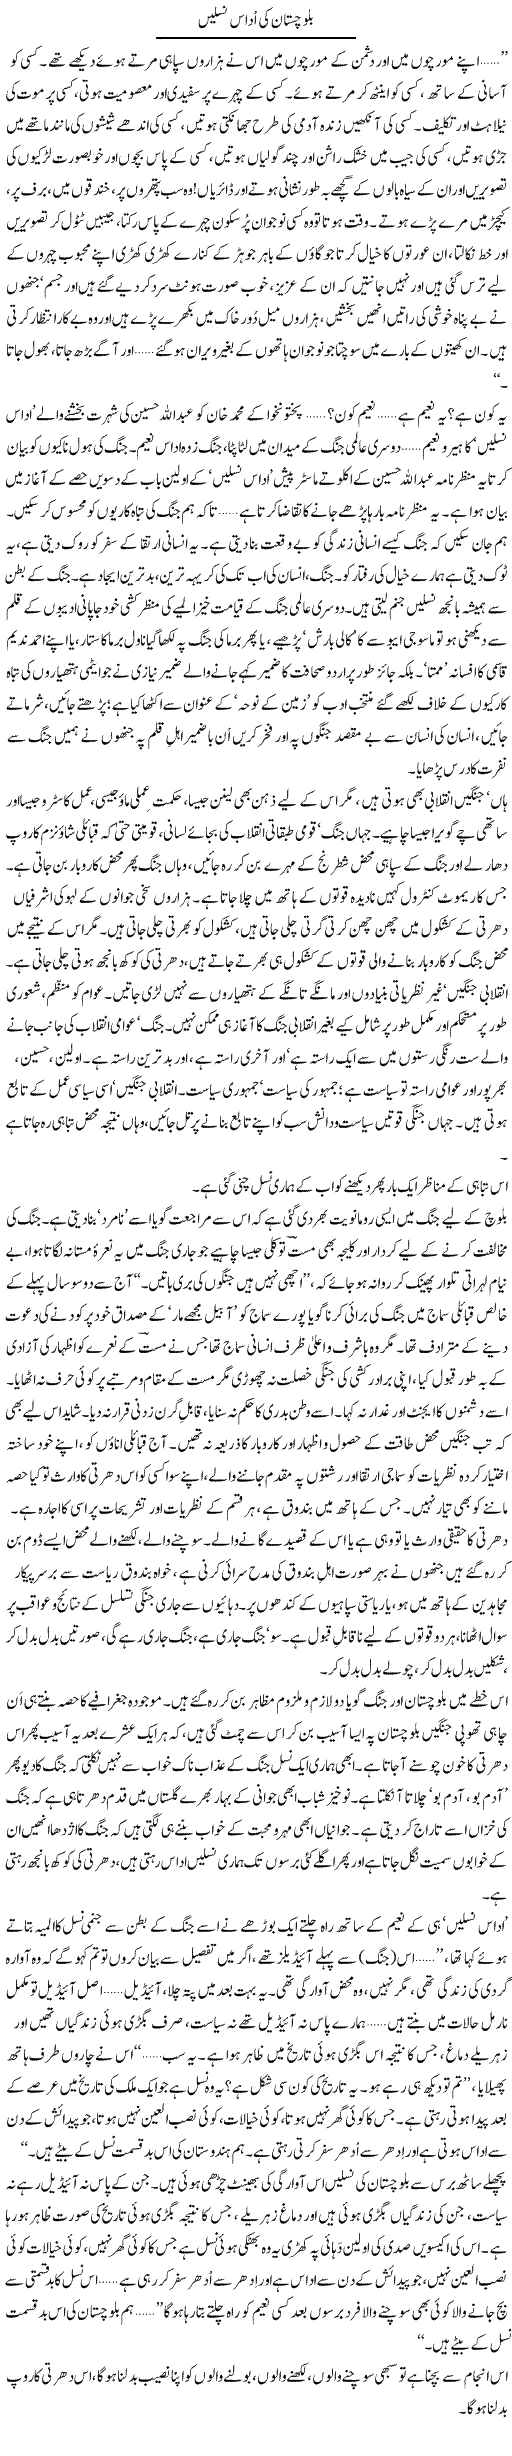 Baluchistan ki udas naslen | Abid Mir | Daily Urdu Columns